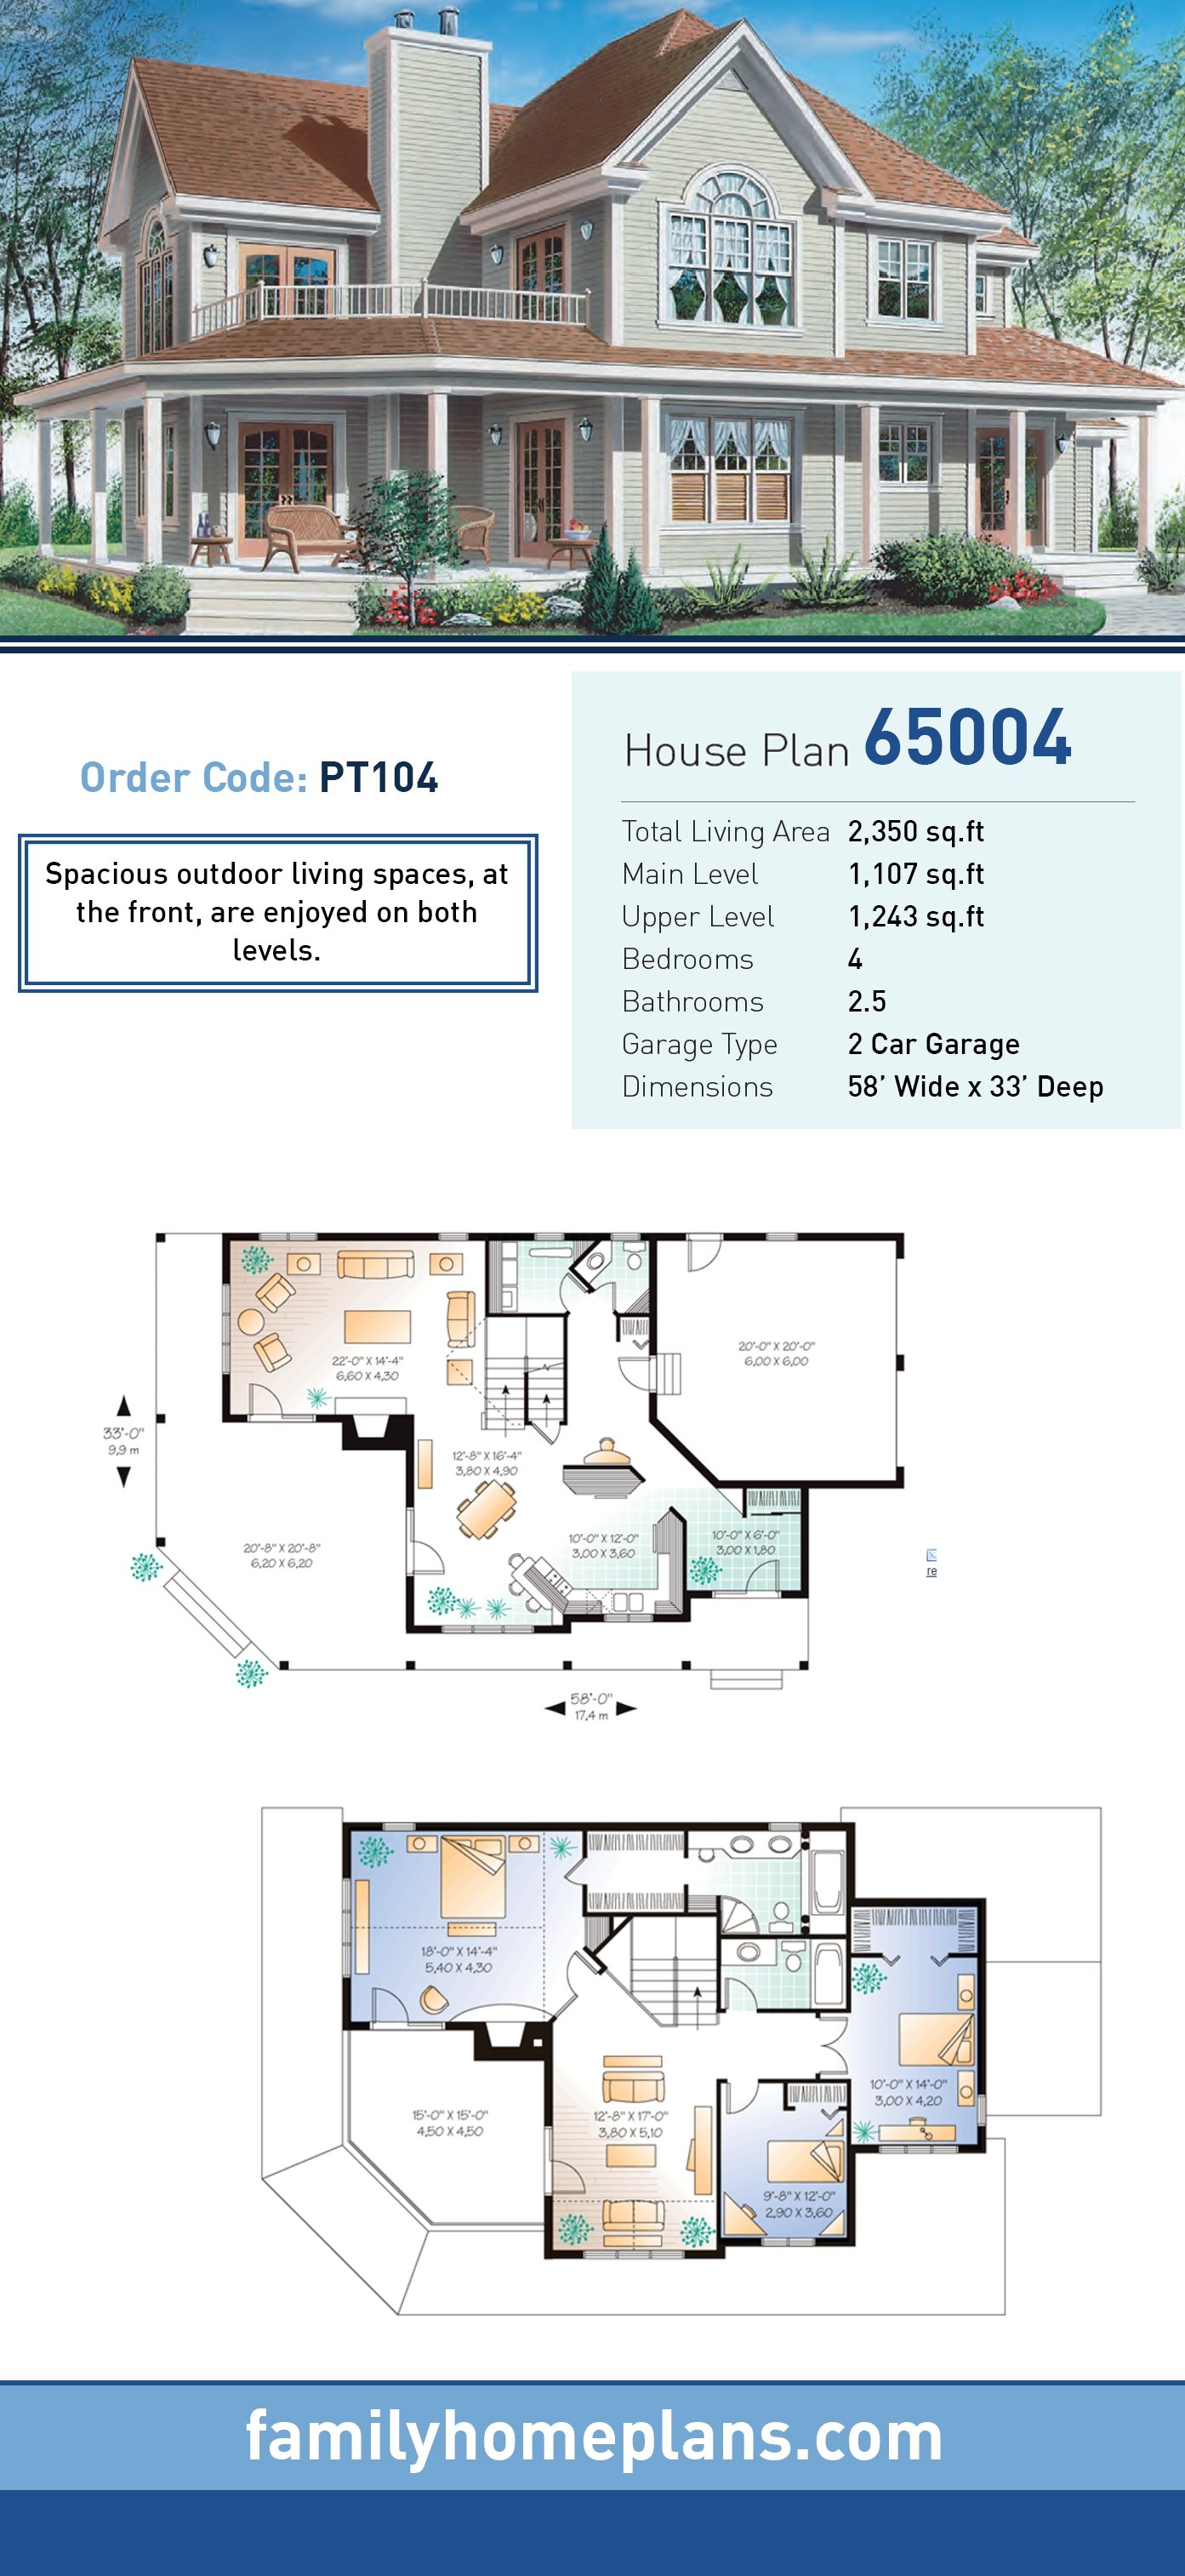 House Plan 65004